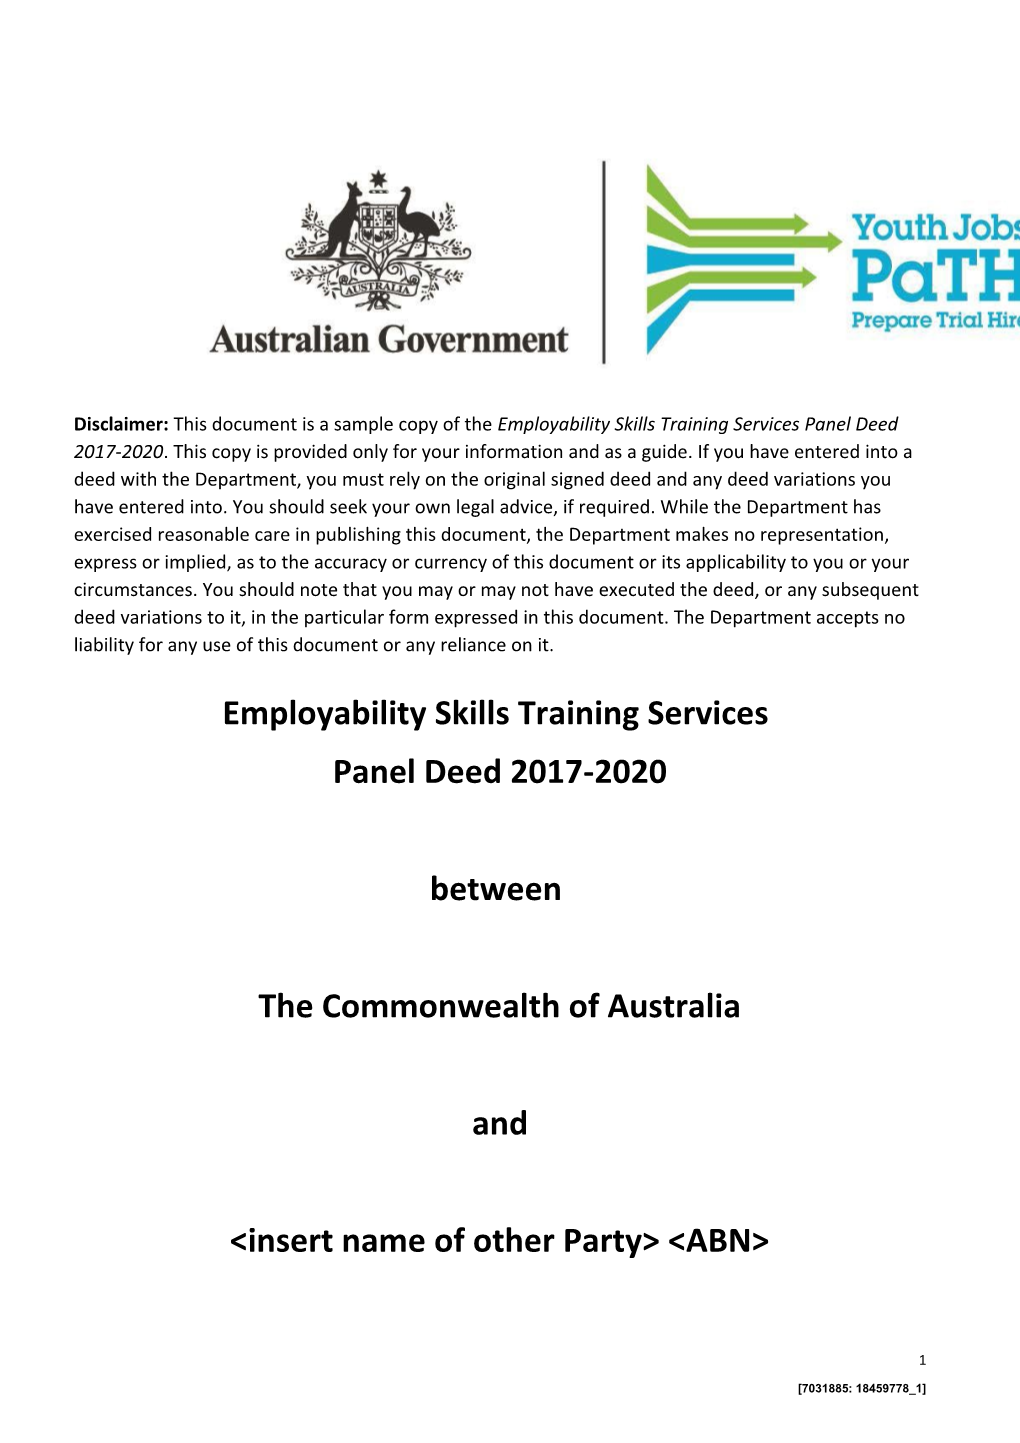 Employability Skills Training Services Panel Deed 2017-2020